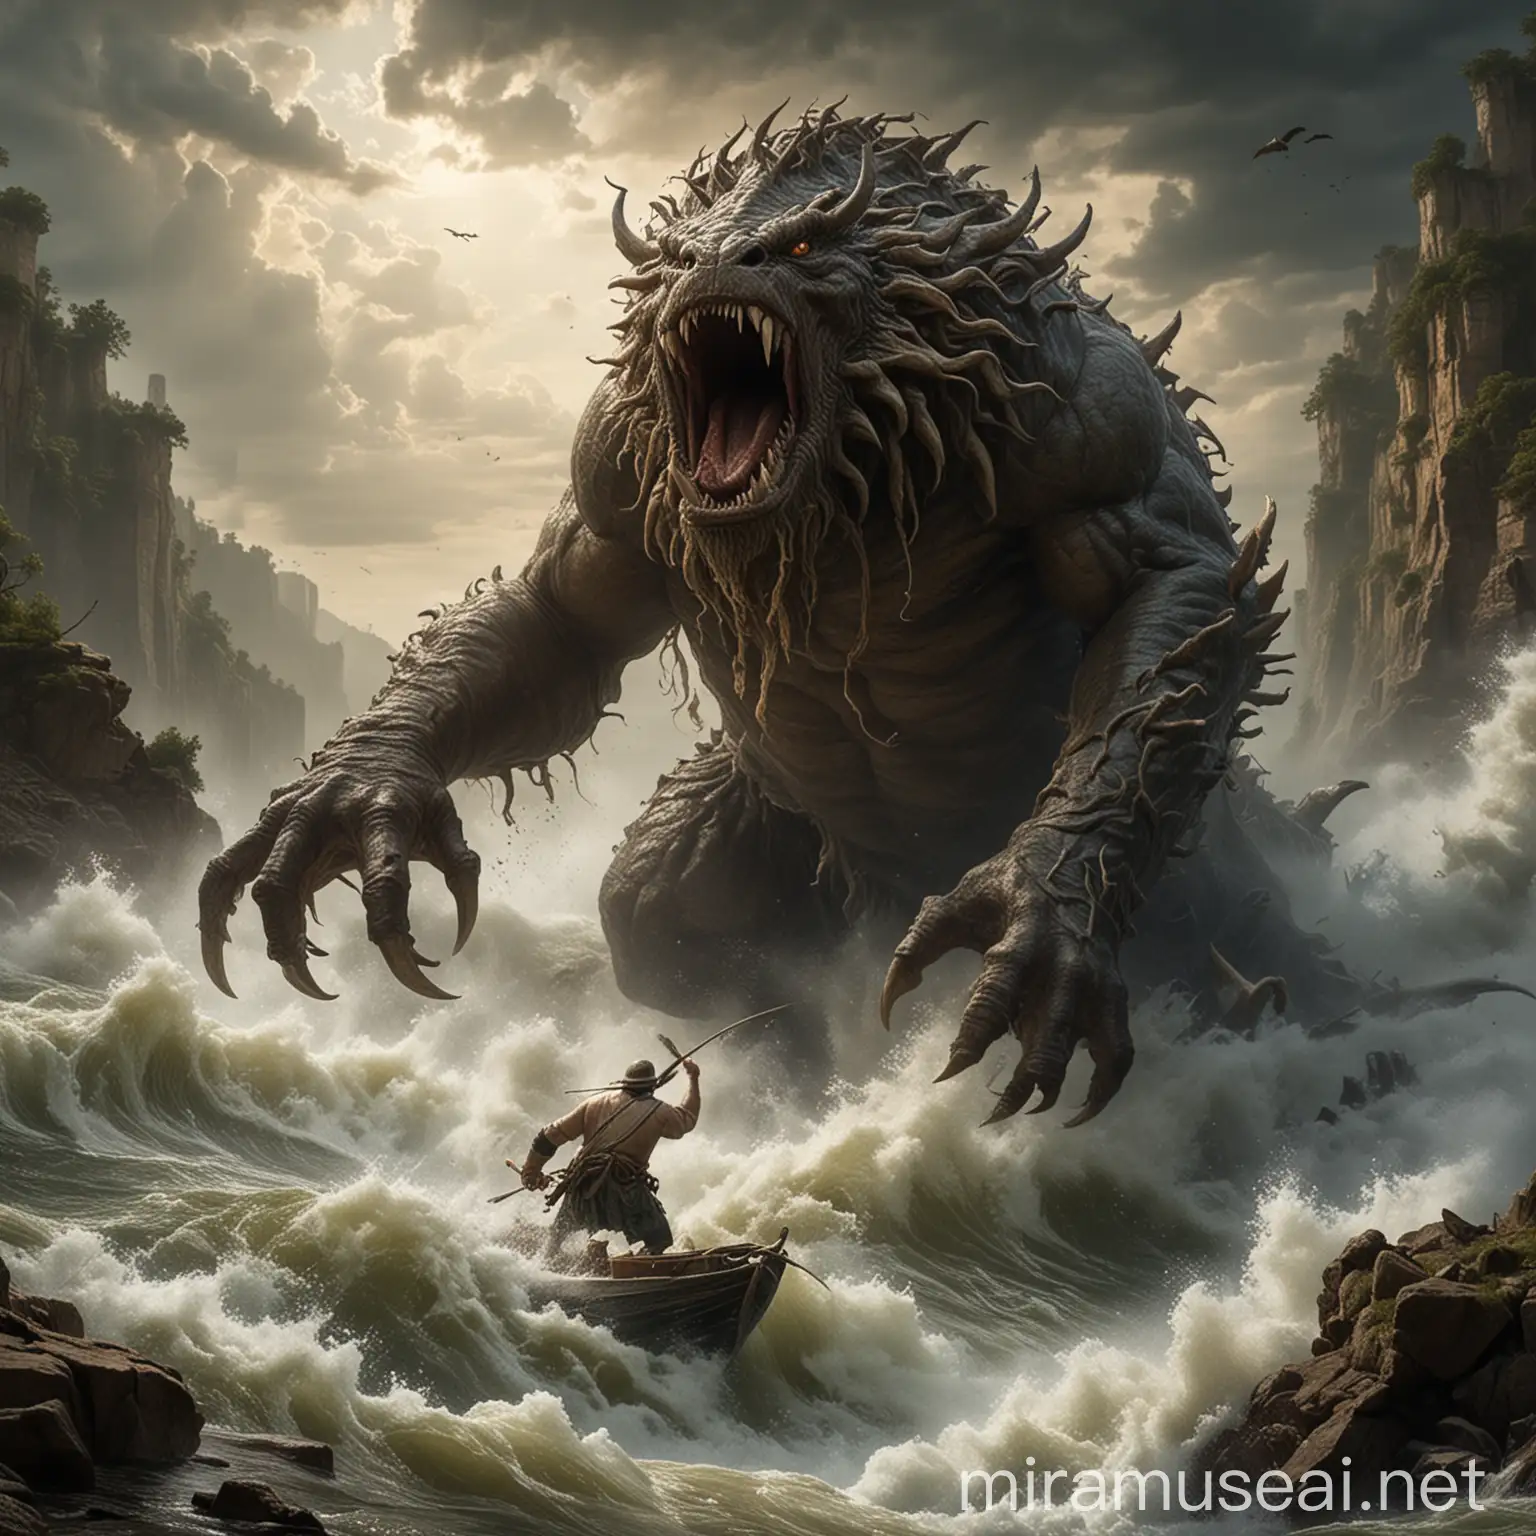 Herculean fisherman battling a monstrous river beast